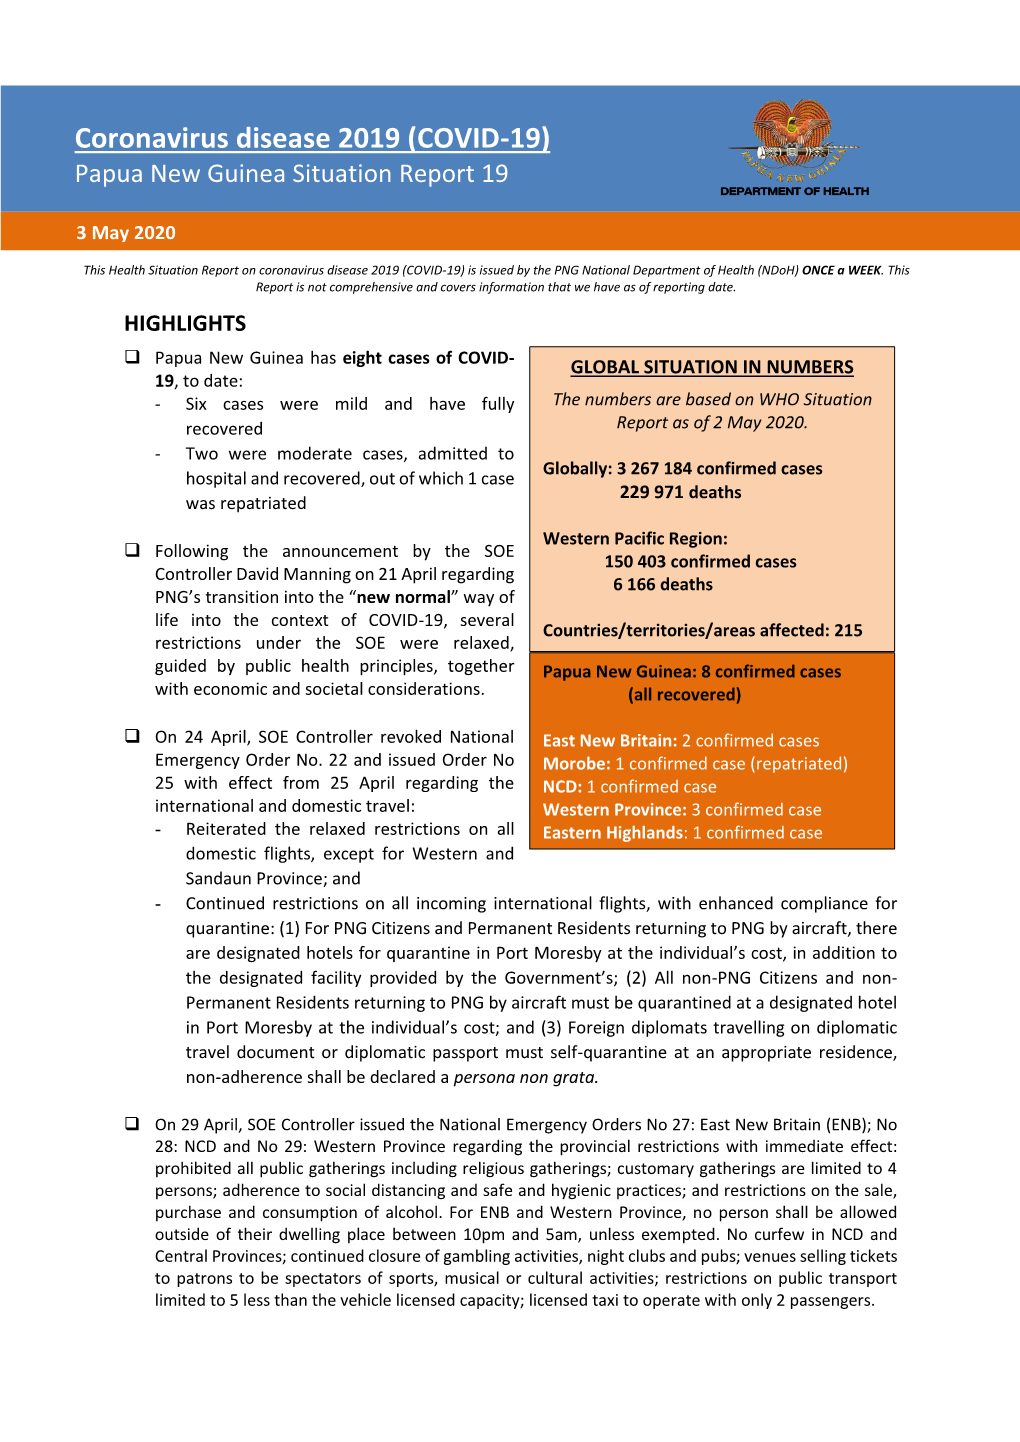 Coronavirus Disease 2019 (COVID-19) Papua New Guinea Situation Report 19